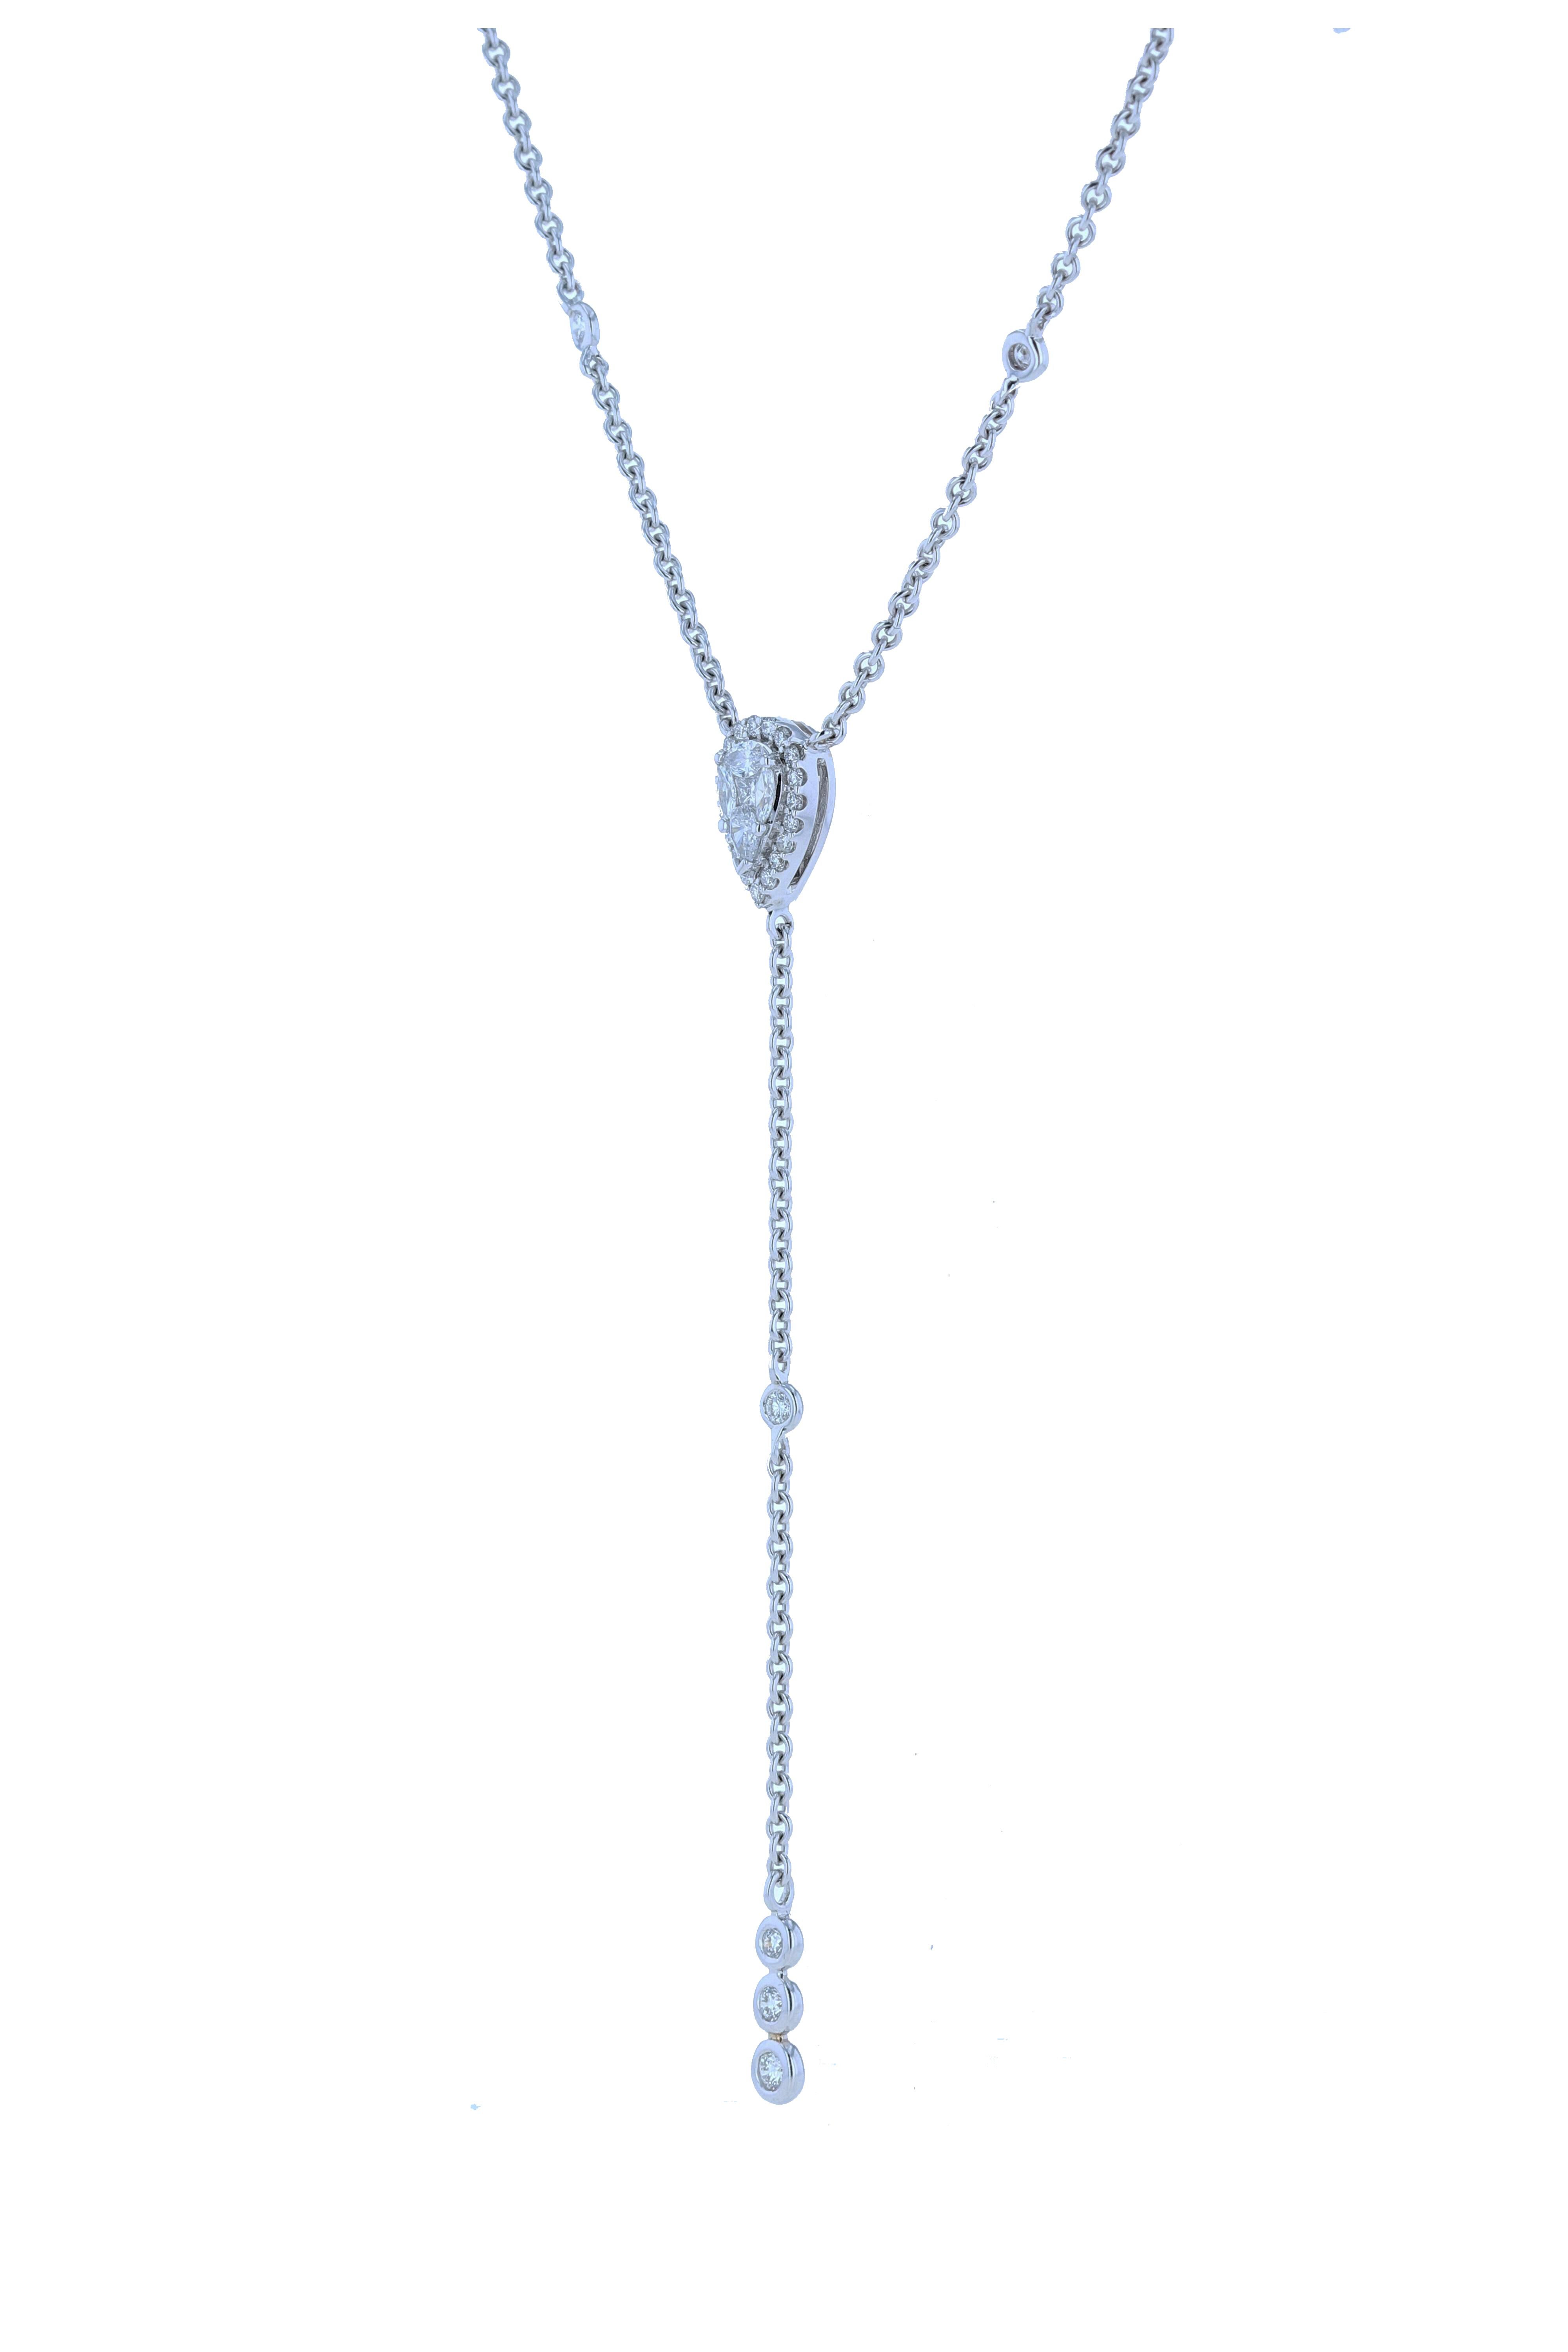 Modern Amwaj White Gold 18 Karat Necklace with Diamonds For Sale